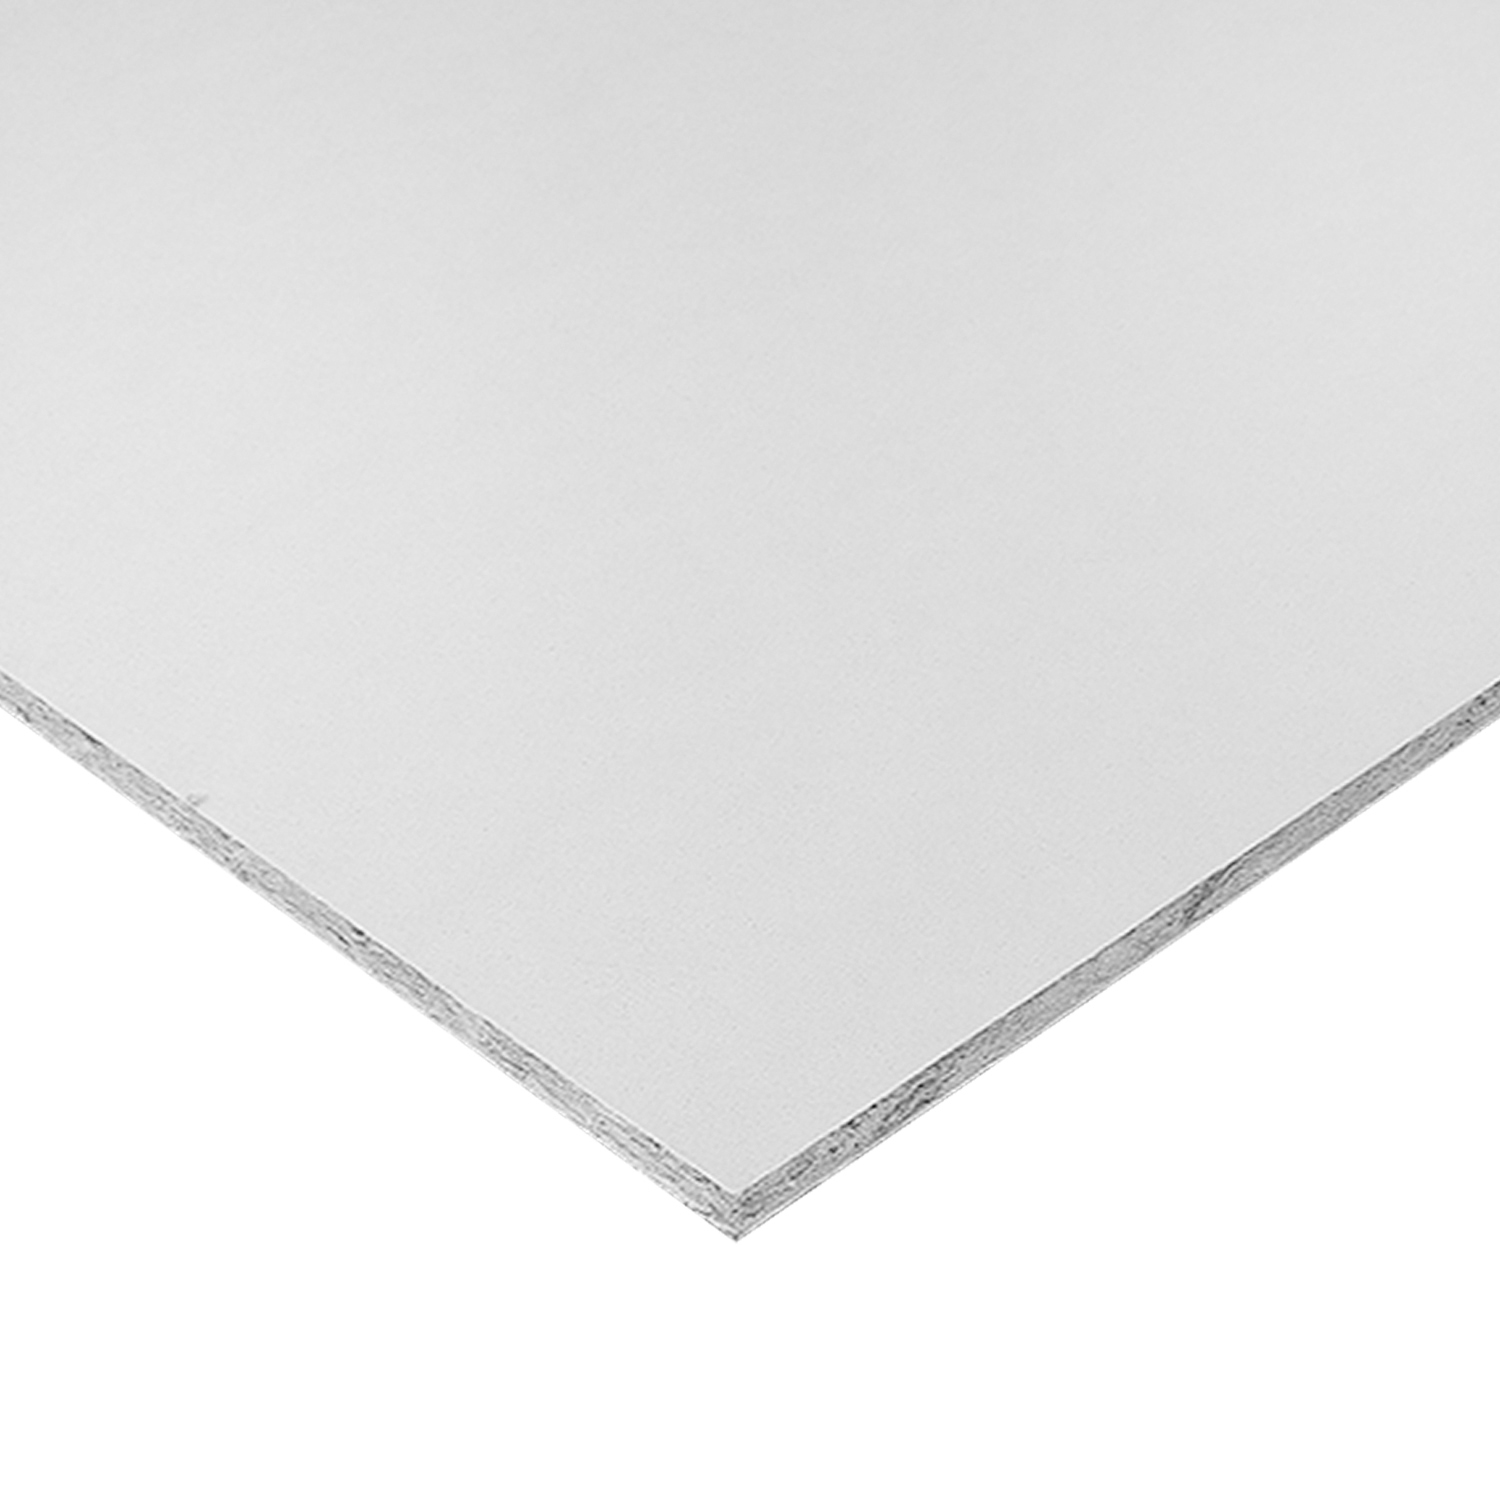 ROCKFON ARTIC Flat Ceiling Tiles 600mm X 600mm (Box Qty: 32)